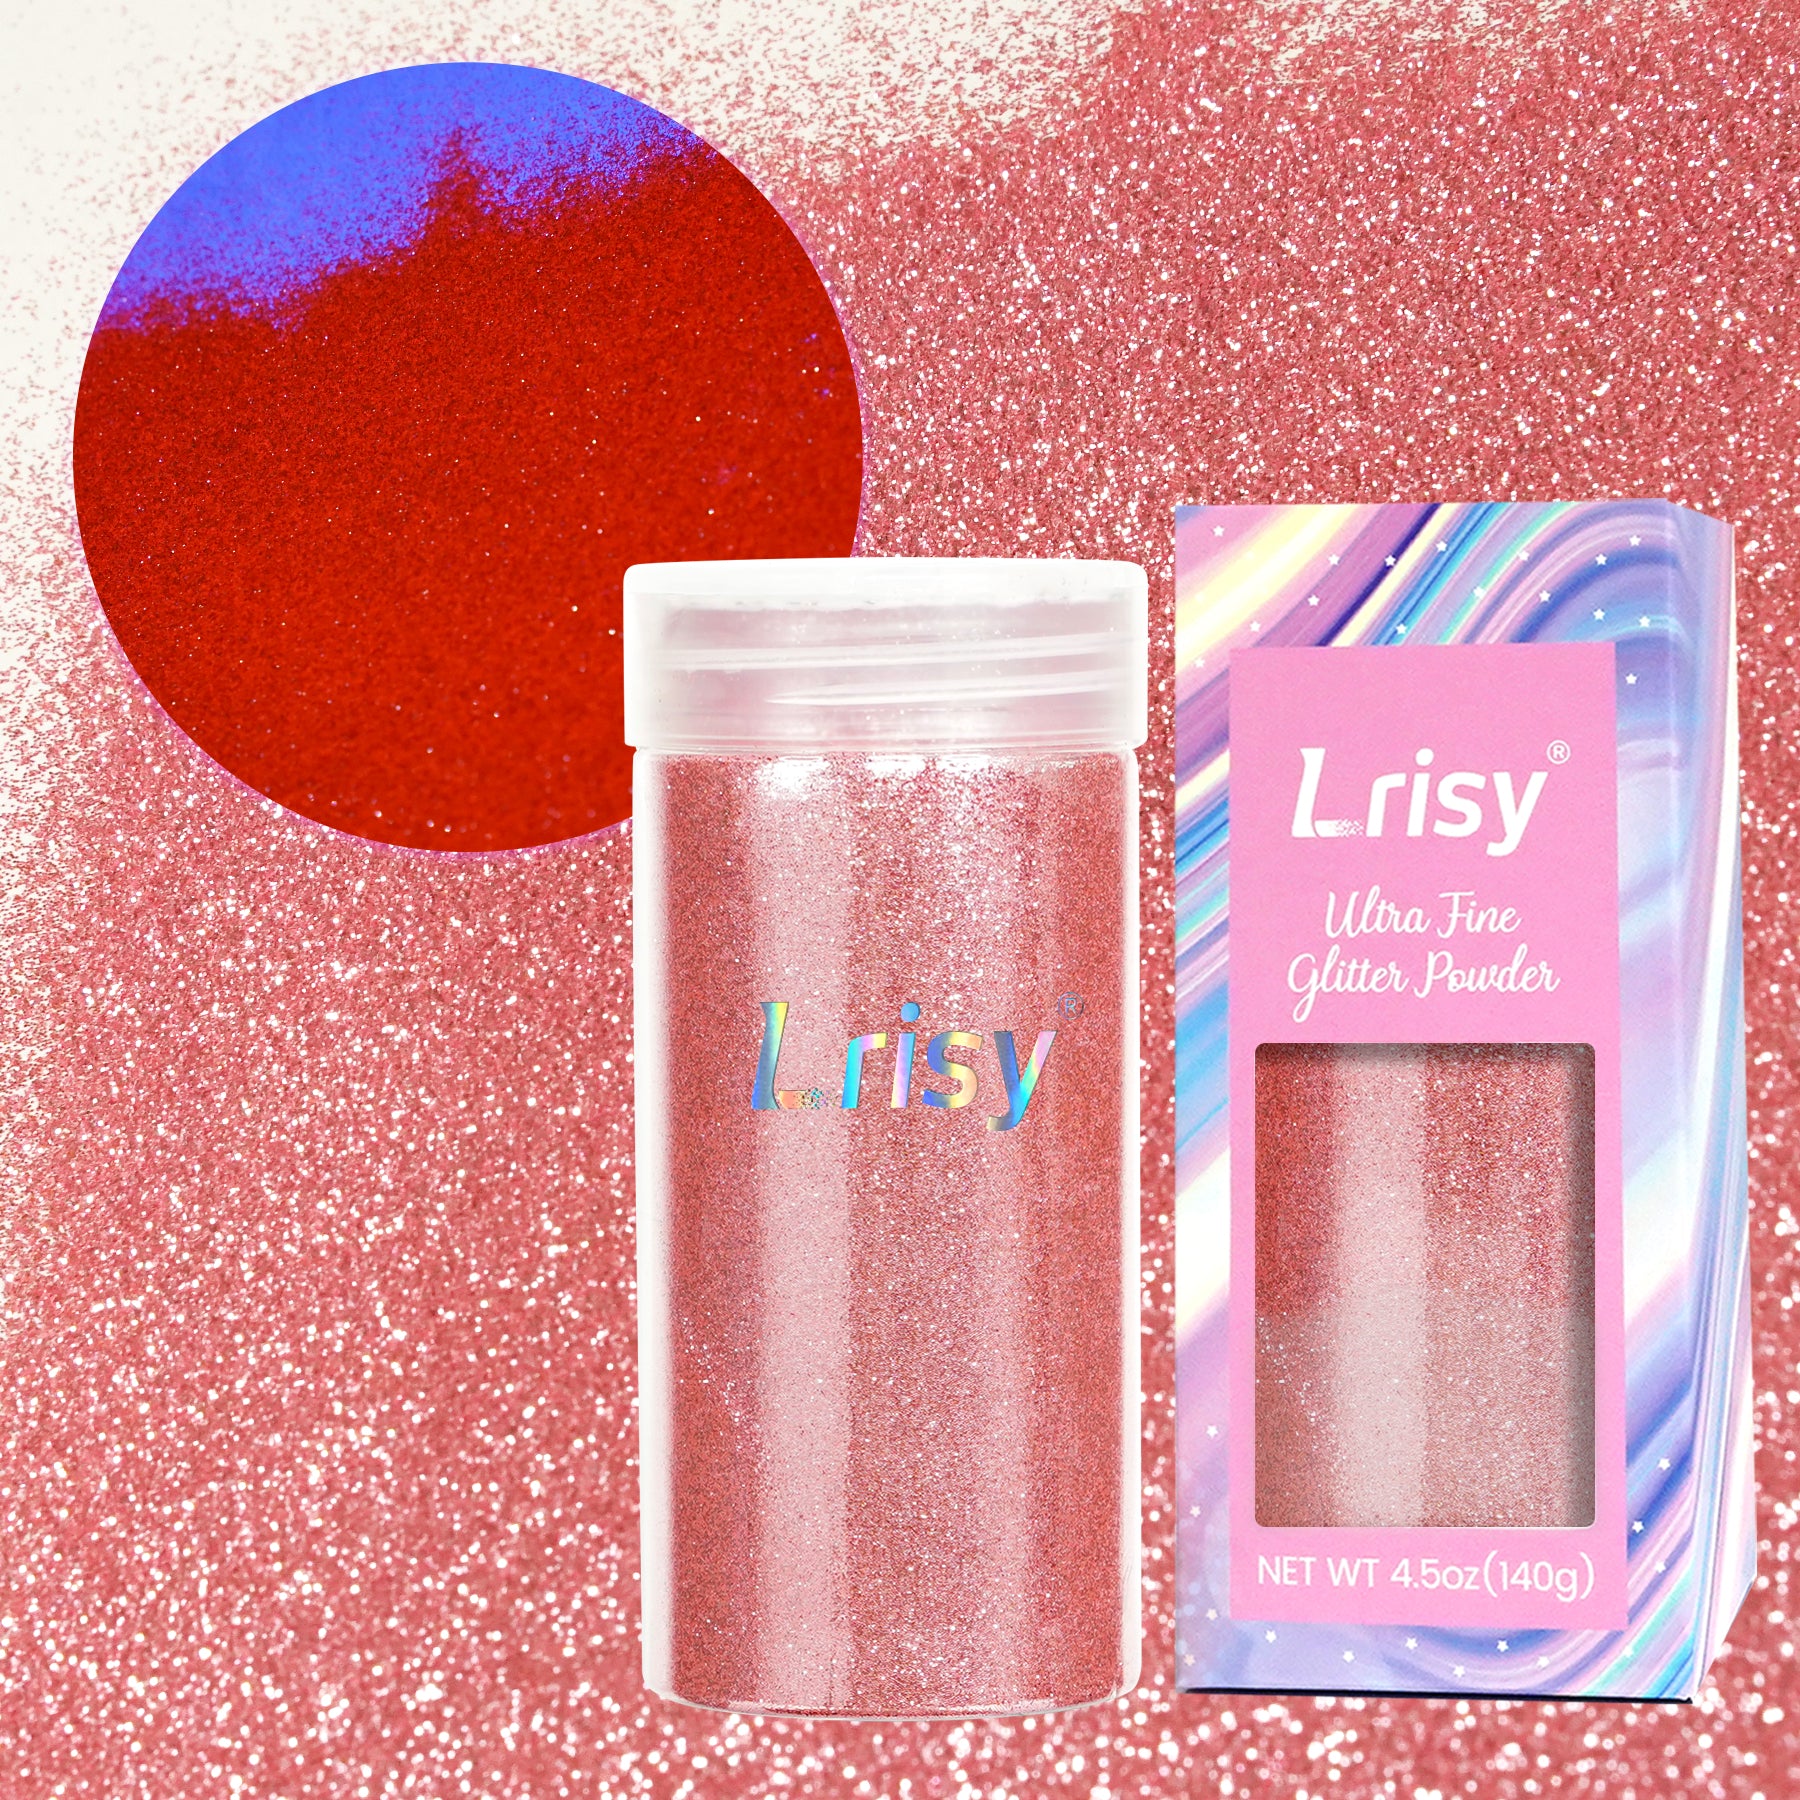 Lrisy Extra Fine Neon Punk Metallic Glitter Powder with Shaker Lid 140g/4.5oz(Punk Carnation Pink)